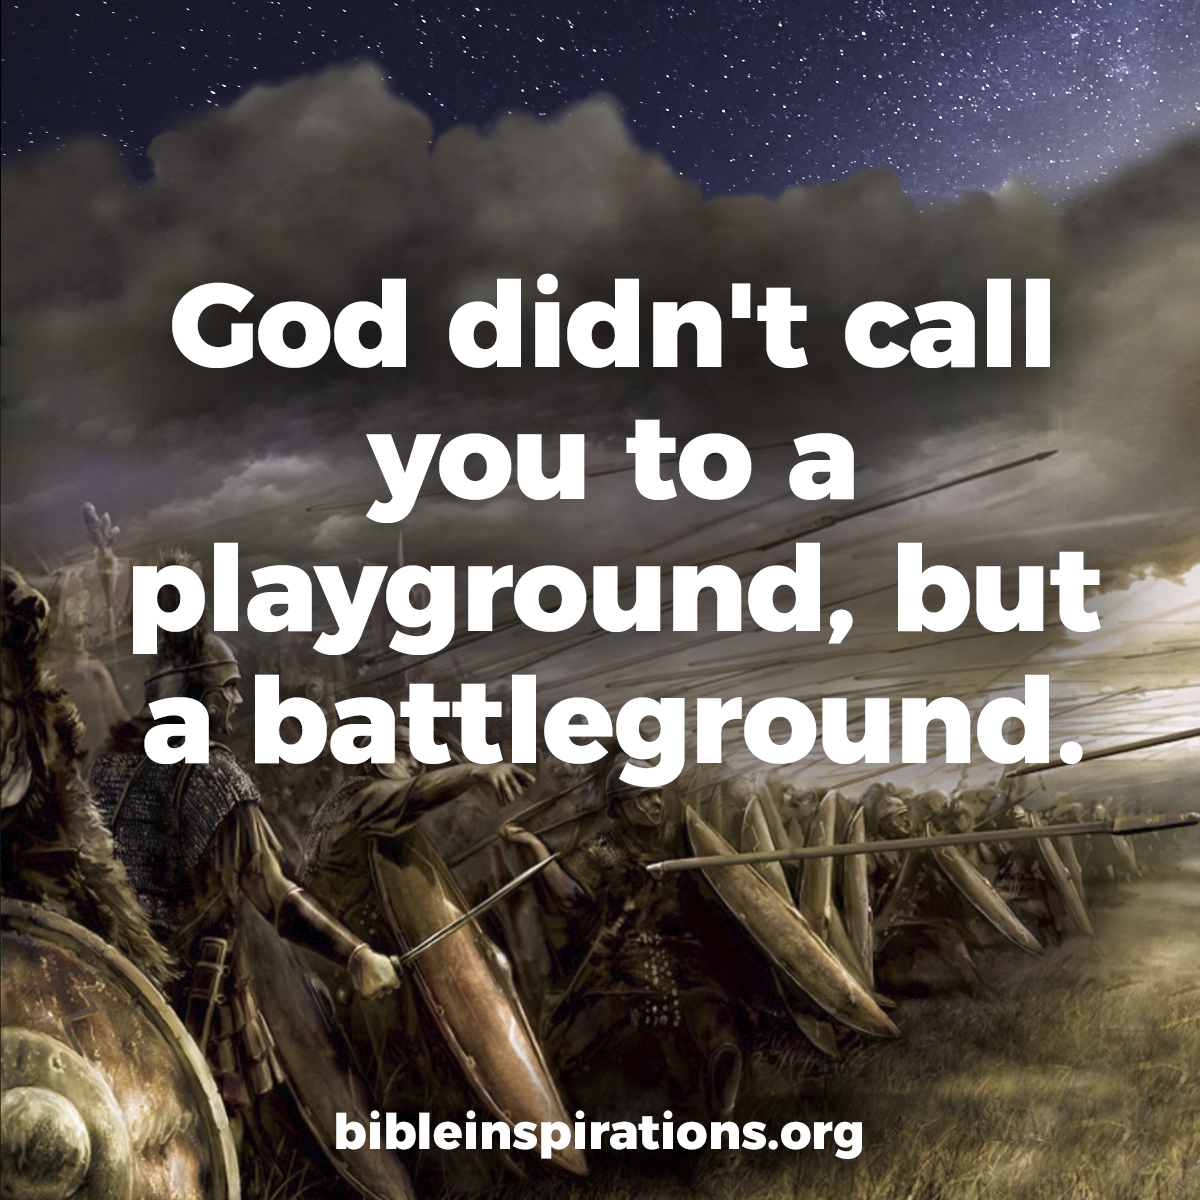 God didn't call you to a playground, but a battleground.